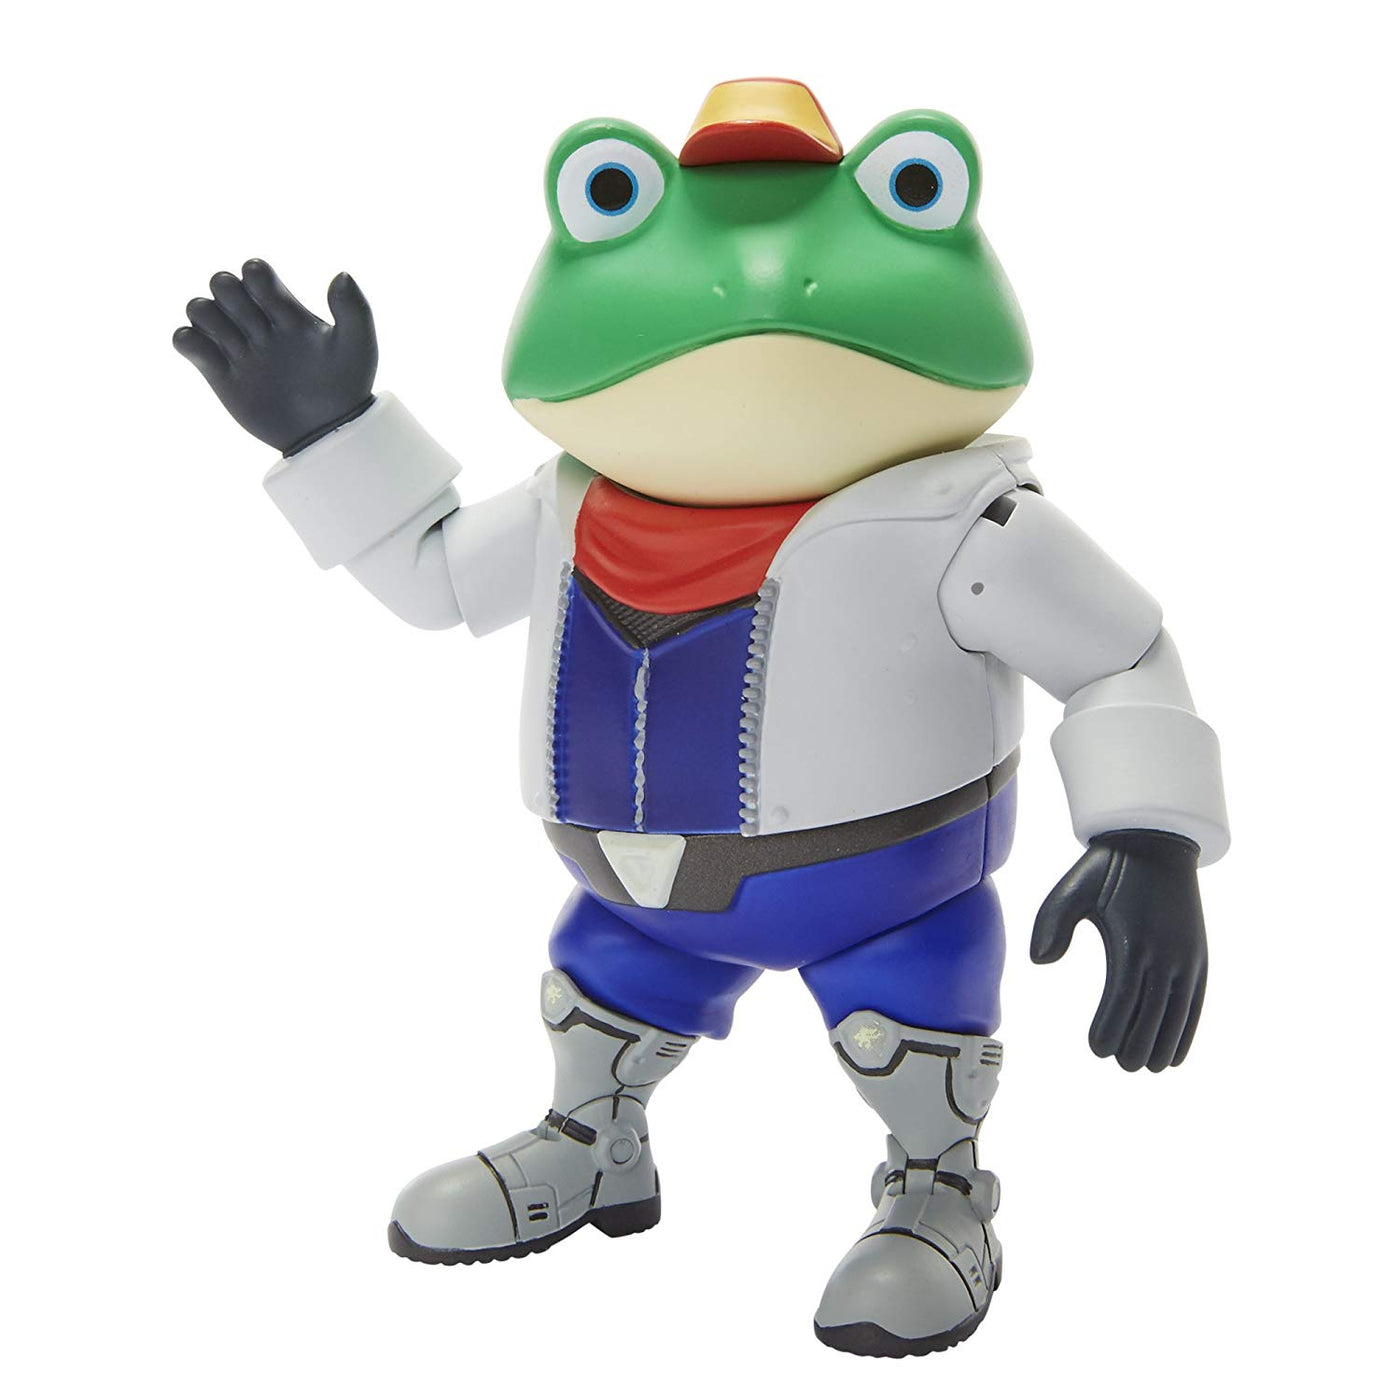 World of Nintendo Slippy Toad Action Figure 4"